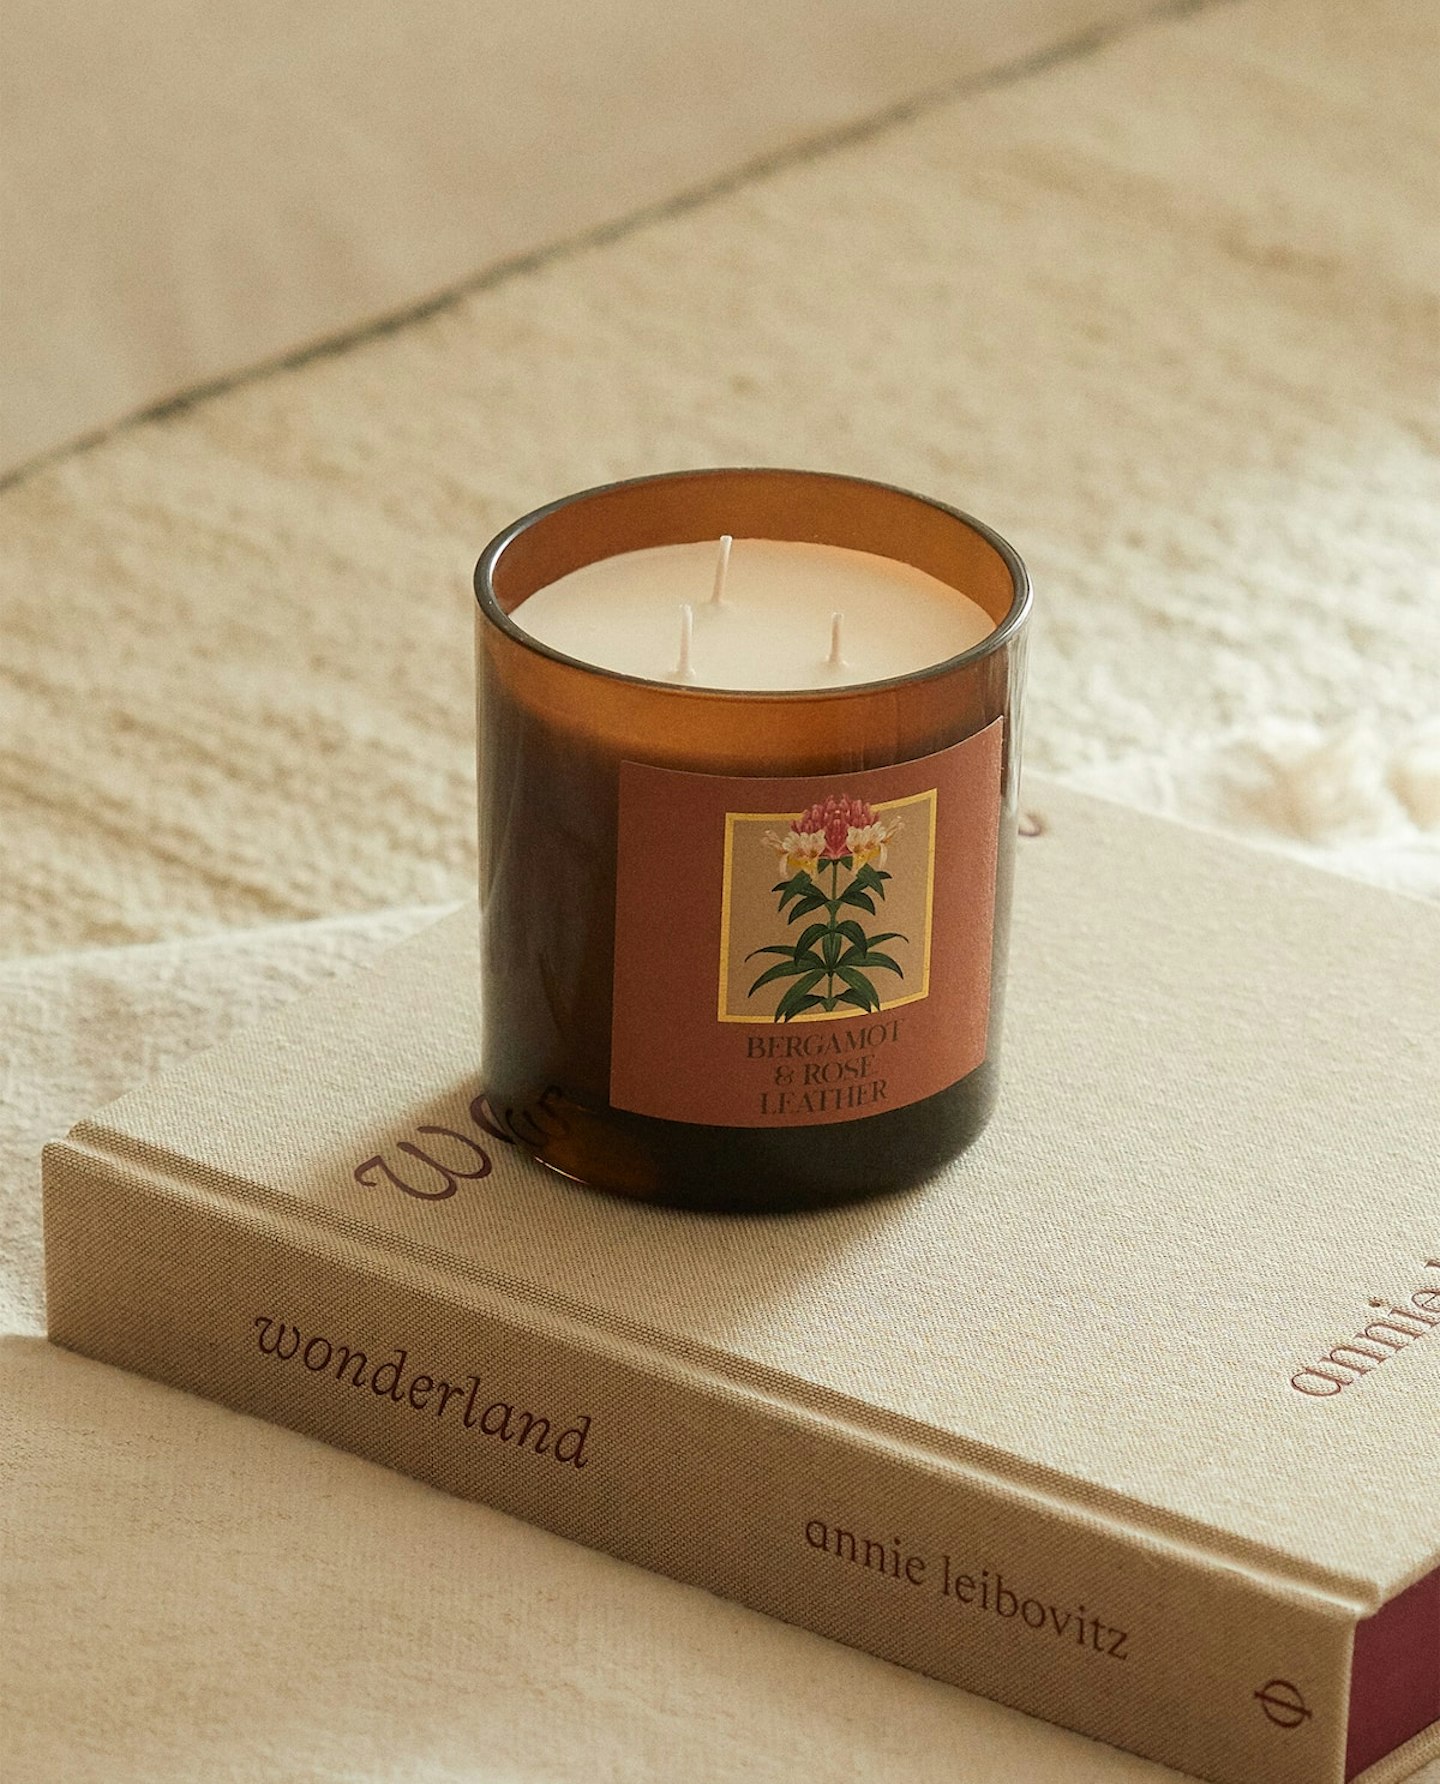 Zara Home, Bergamot Rose and Leather candle, £22.99